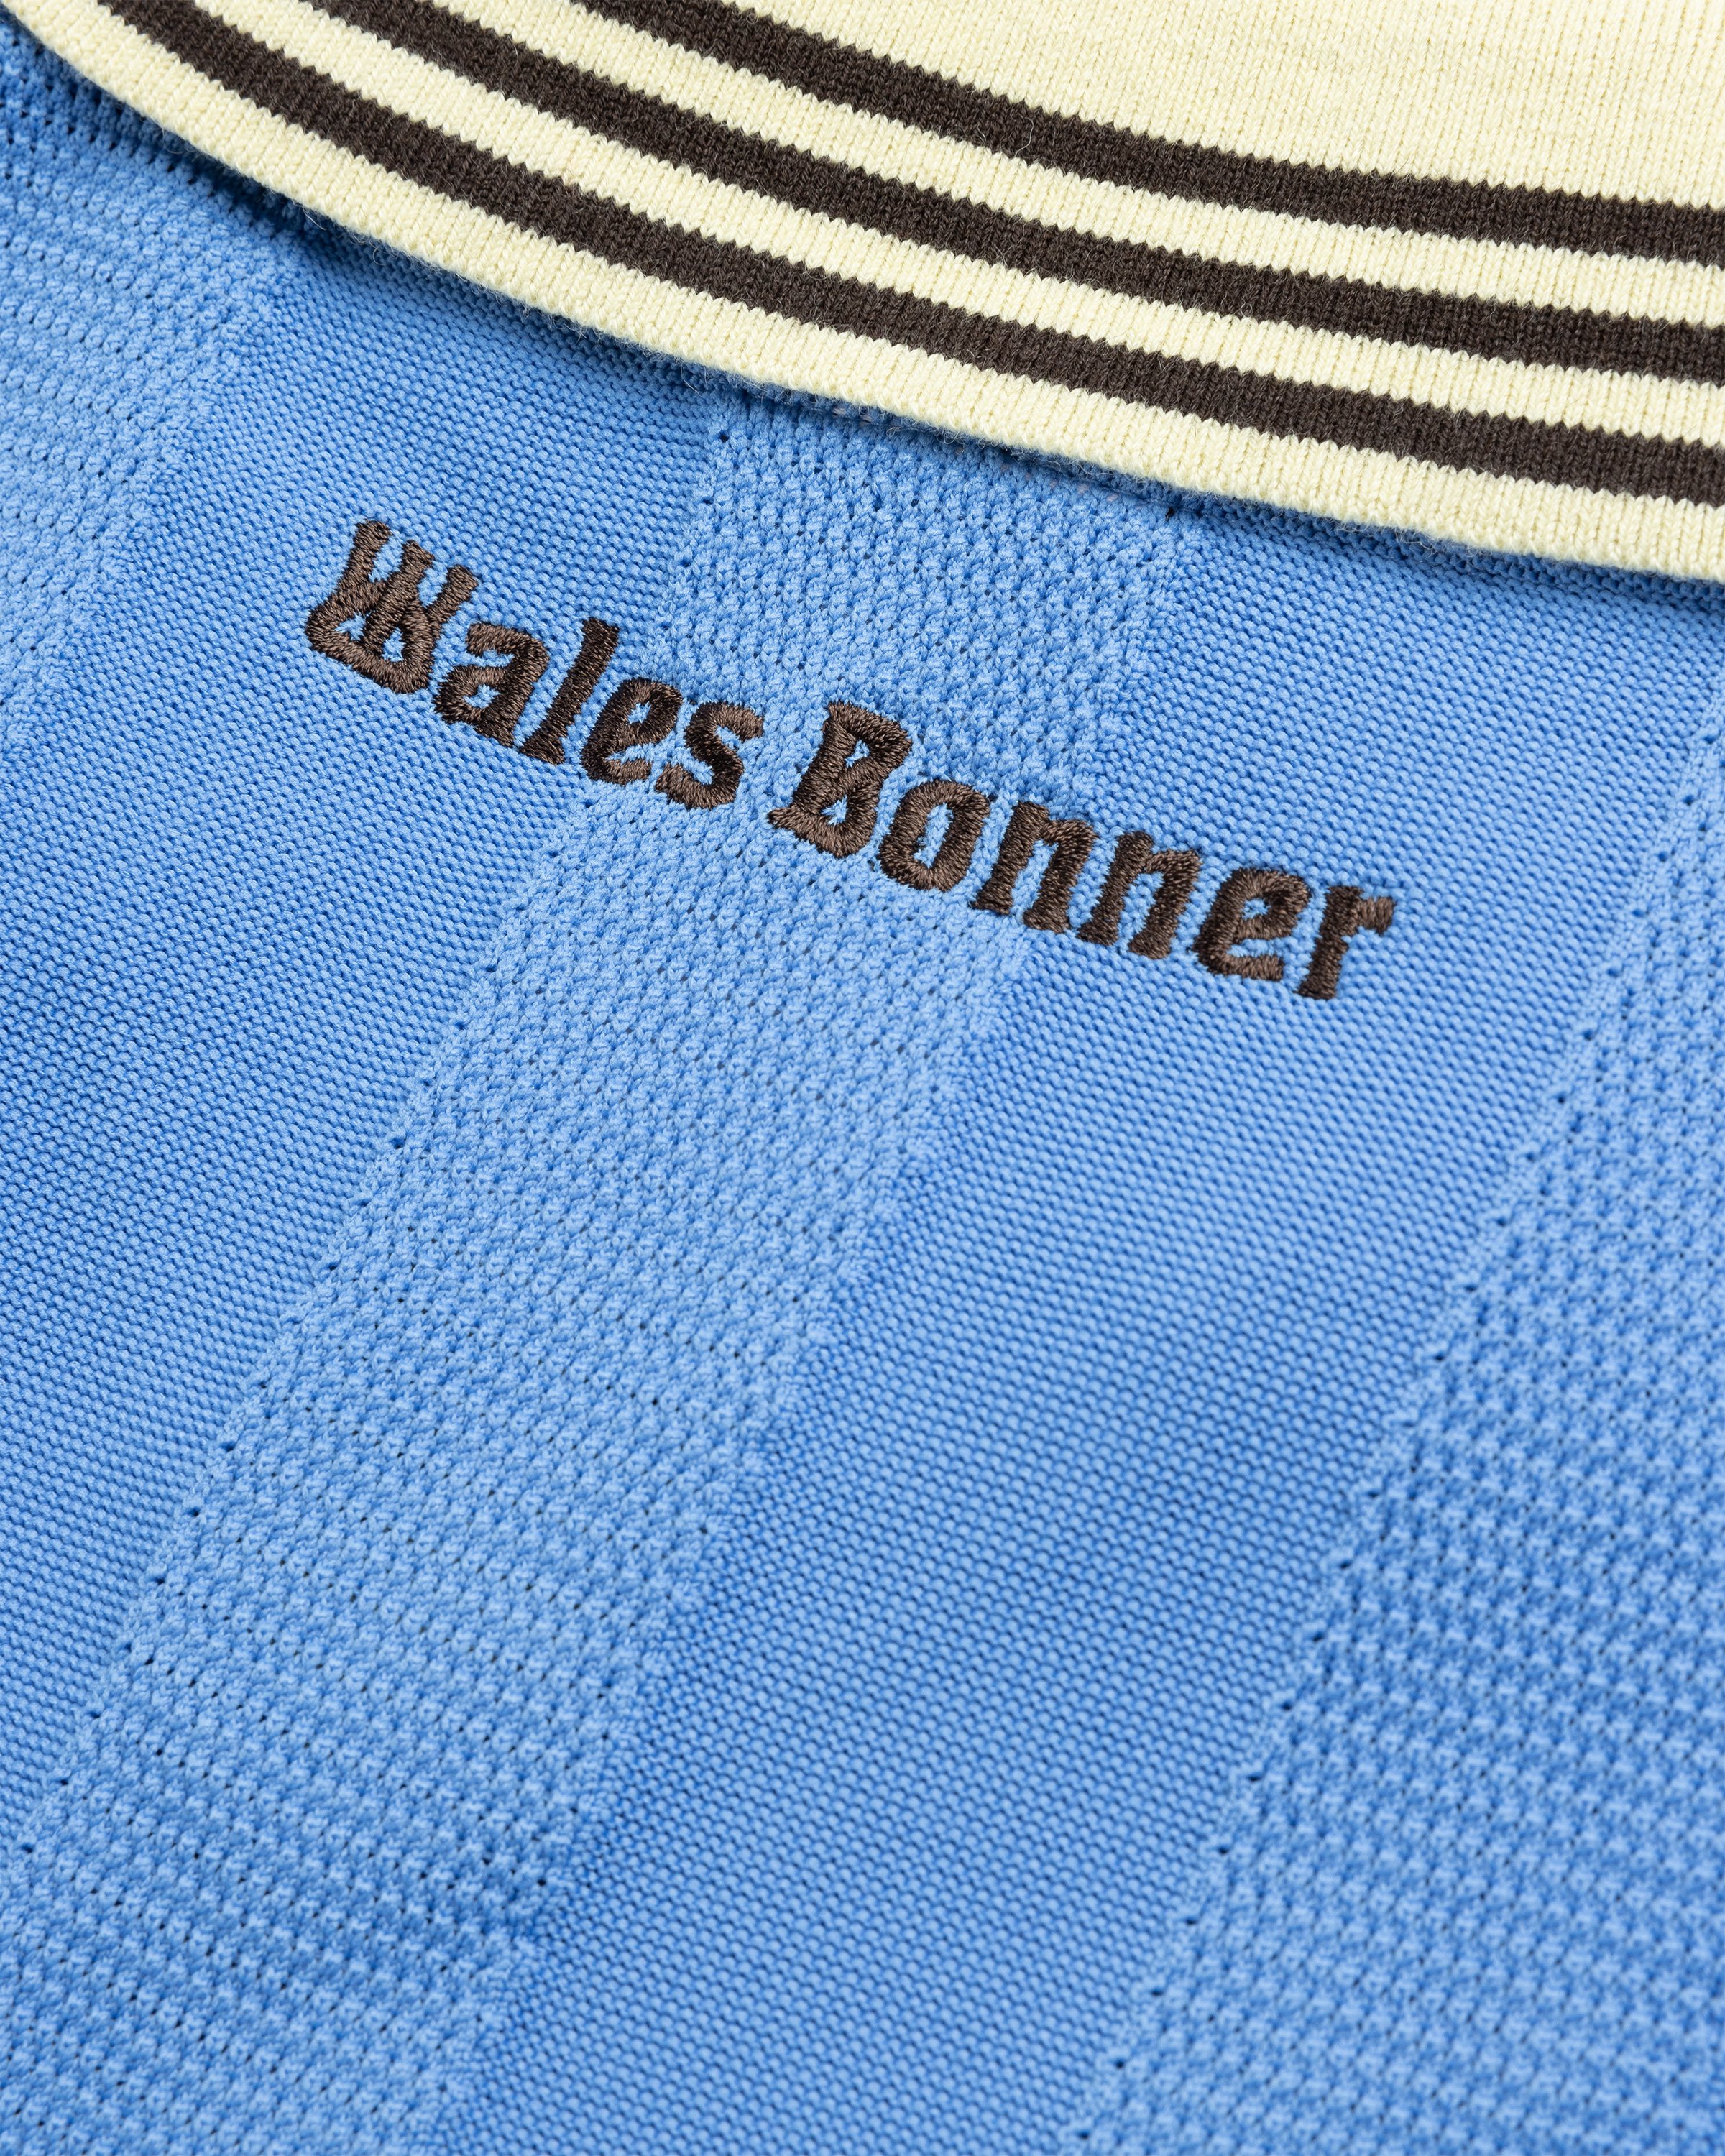 Adidas x Wales Bonner - WB KNIT FTBL LS LUCBLU - Clothing - Blue - Image 7